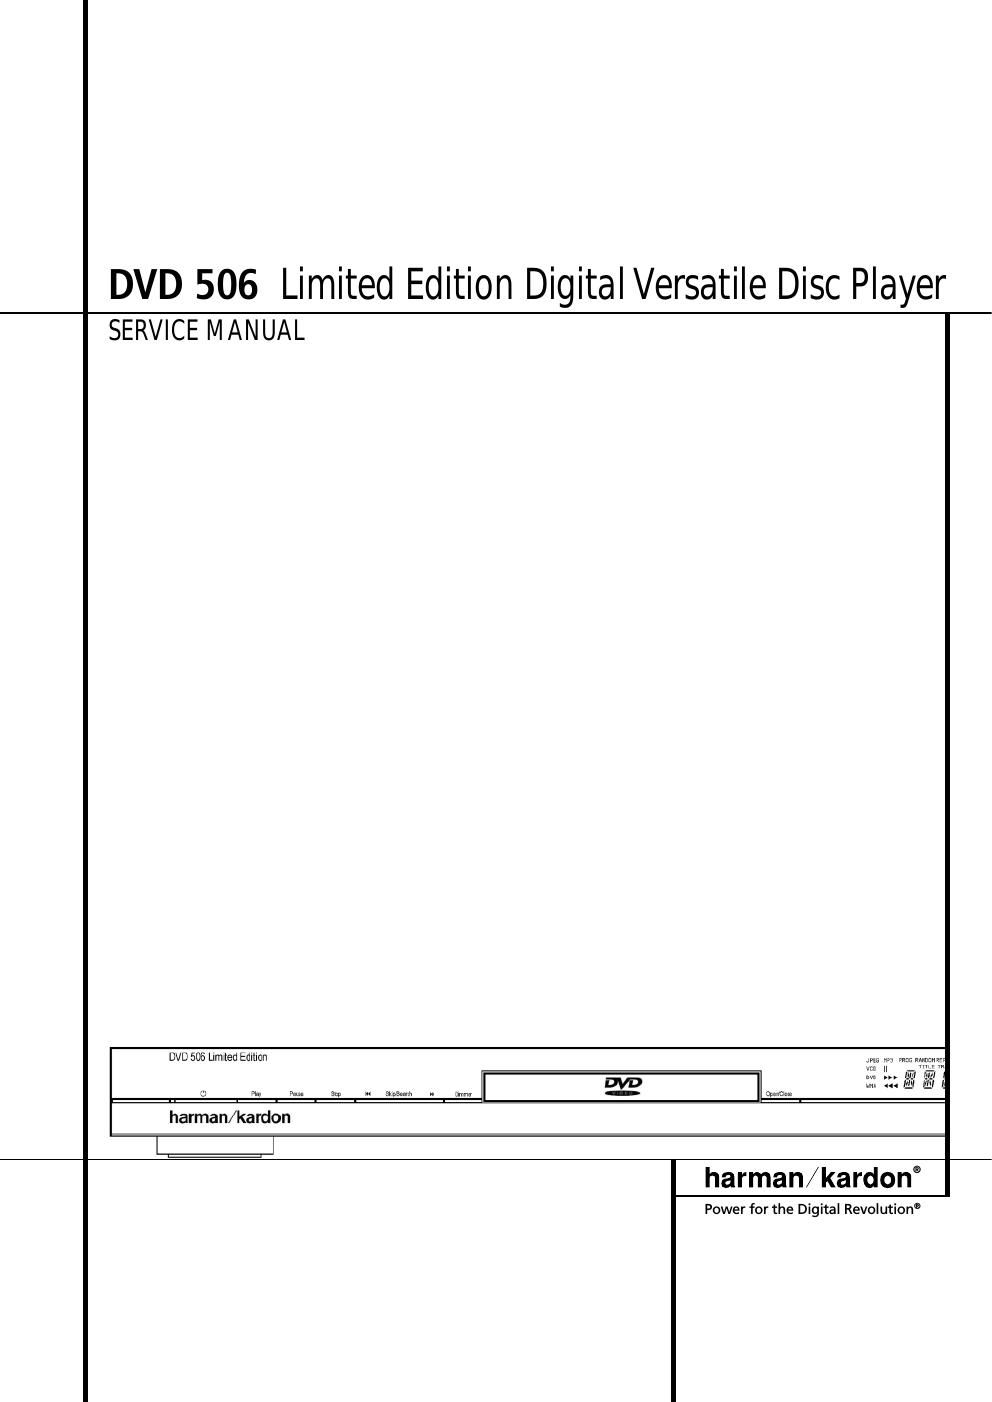 harman kardon dvd 506 service manual